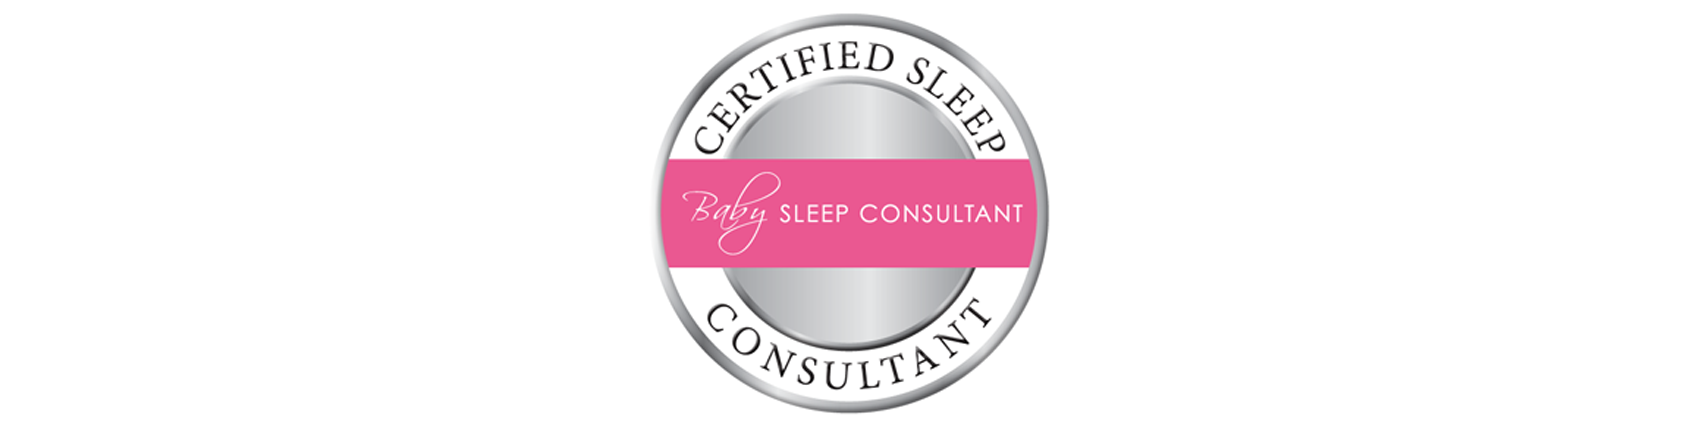 Certified Sleep Consultant Baby Sleep Consultant